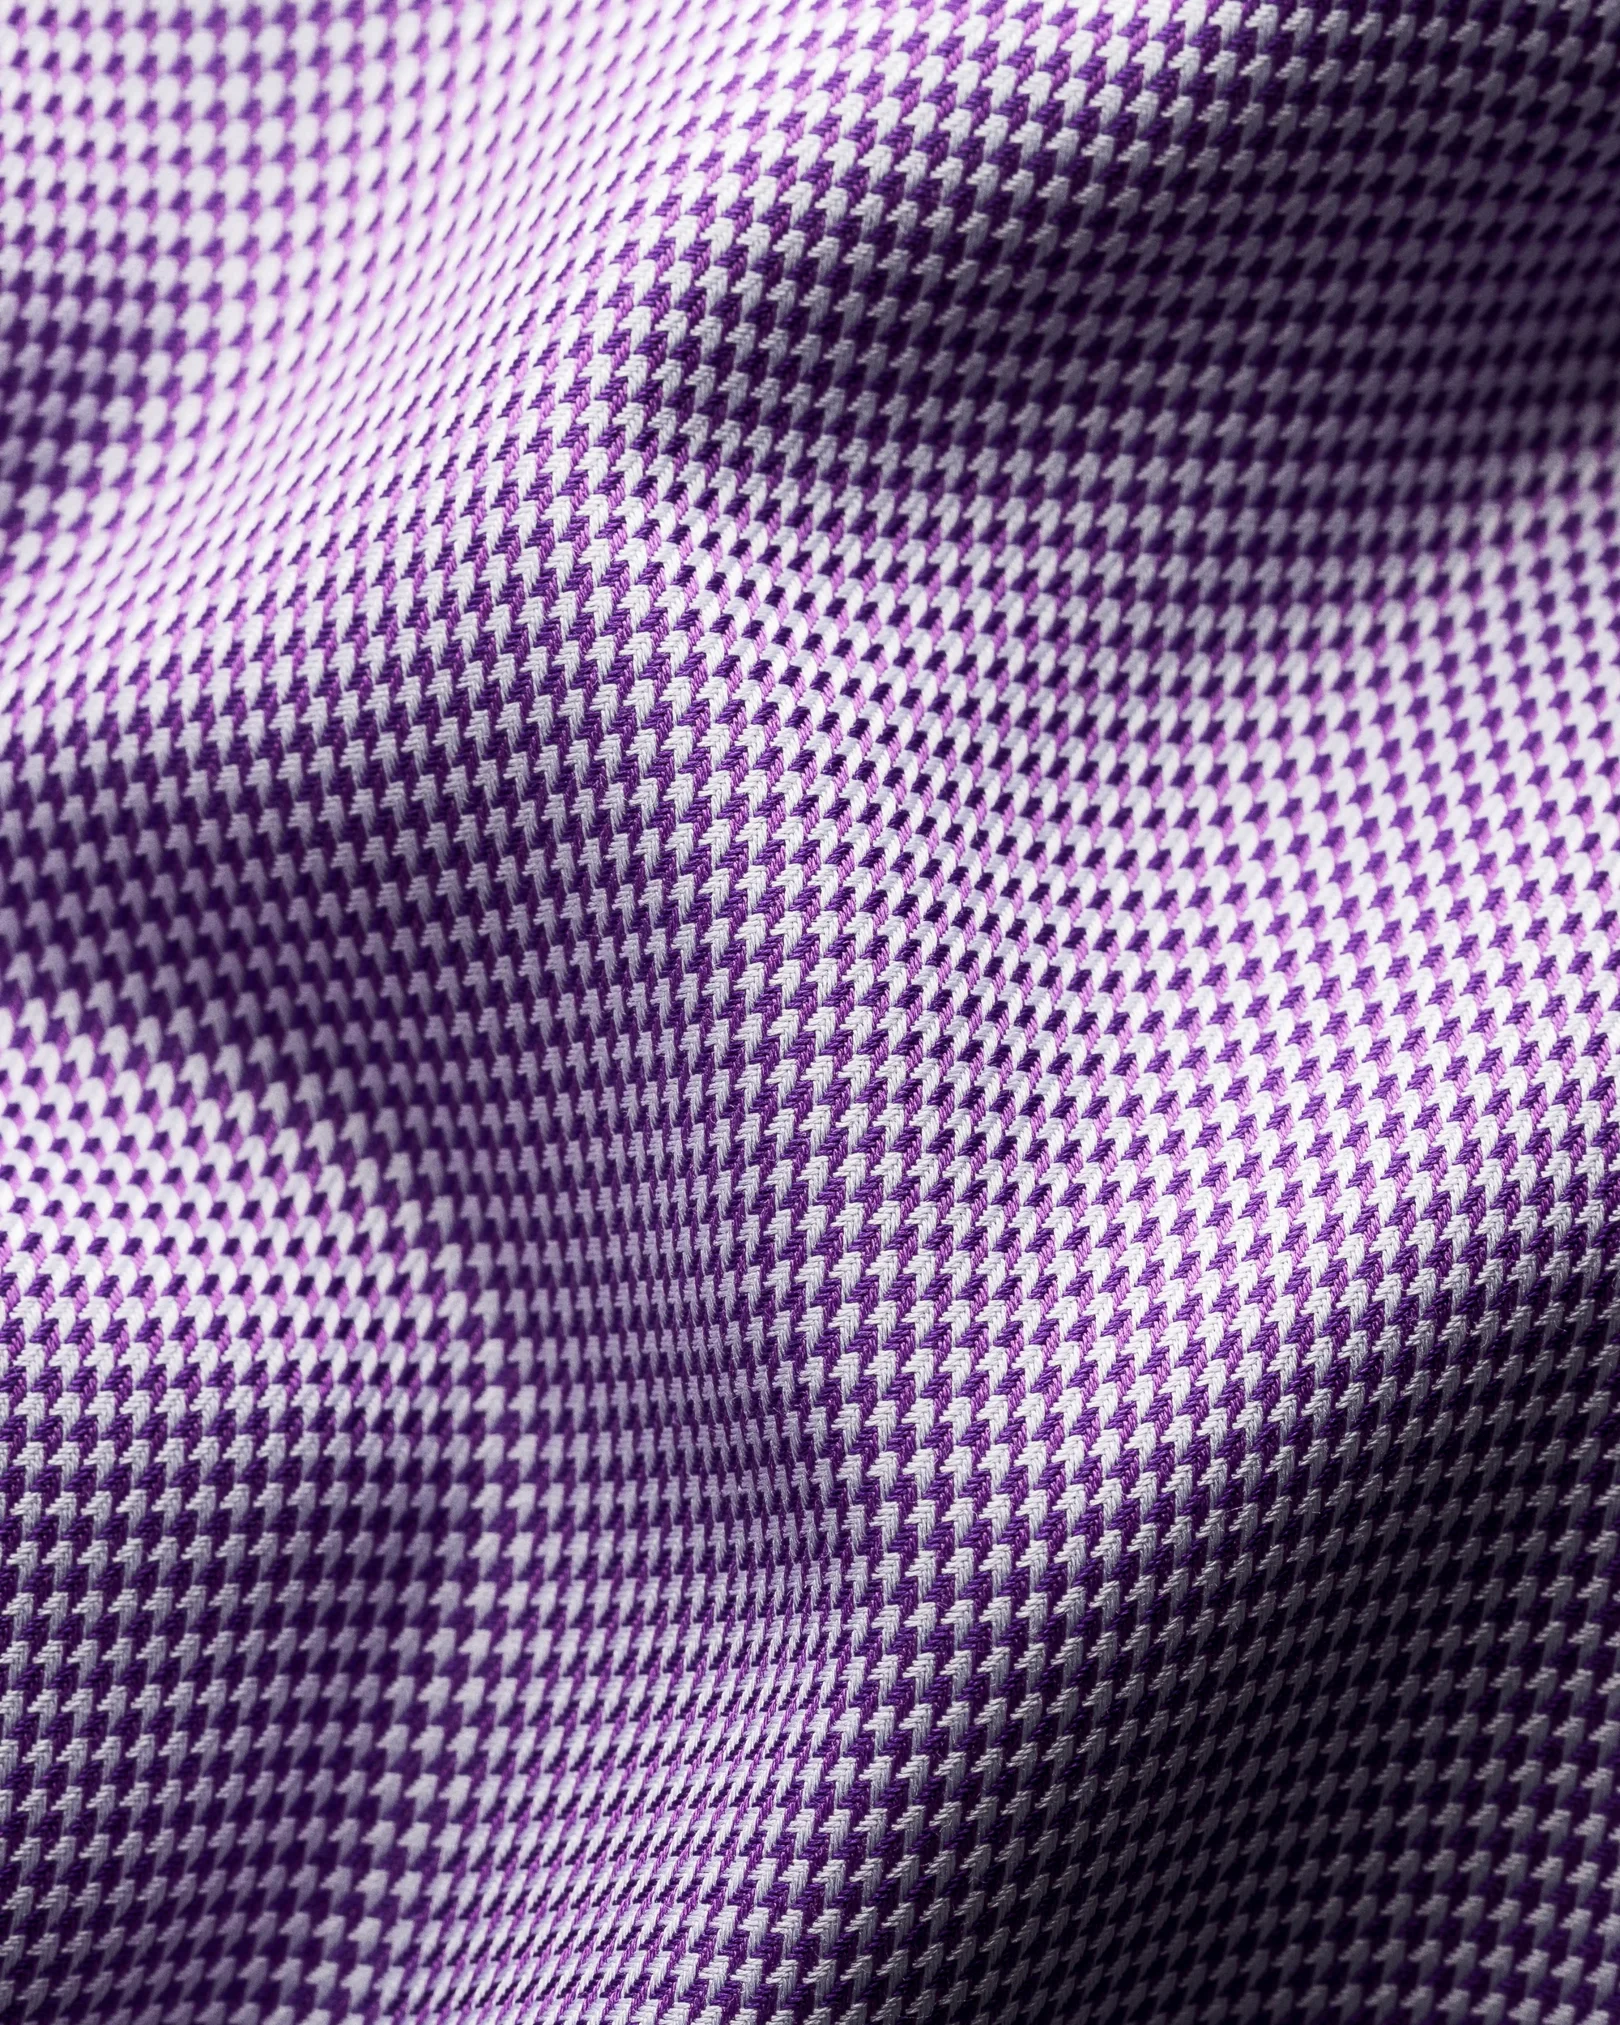 Eton - mid purple textured twill